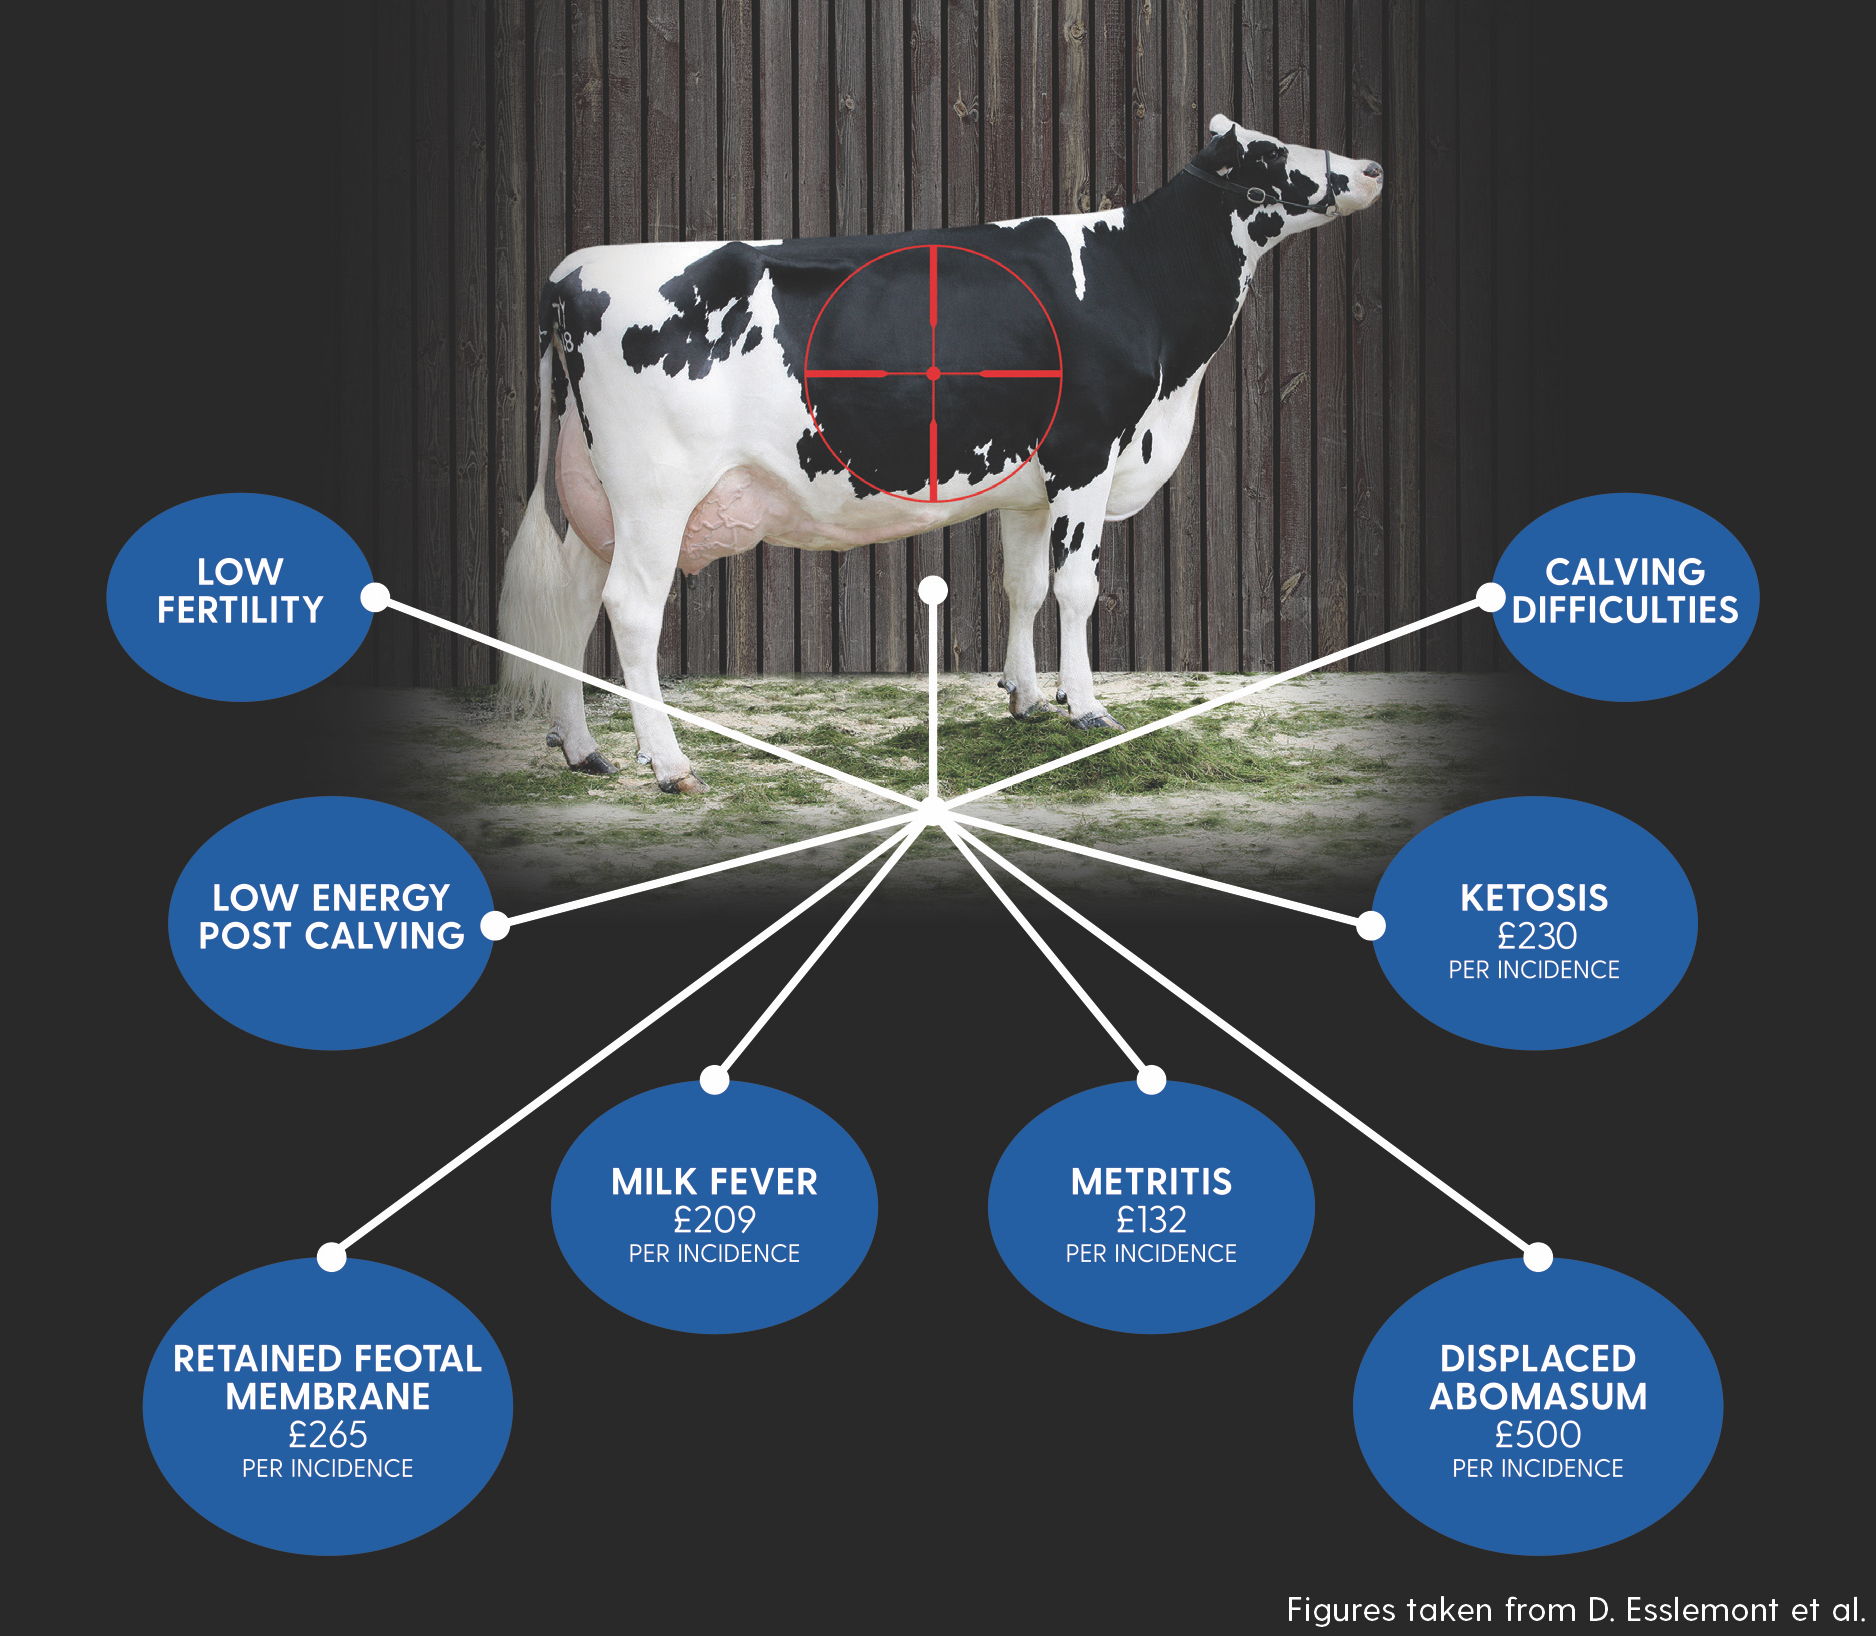 Why we need a perfect calcium balance at calving